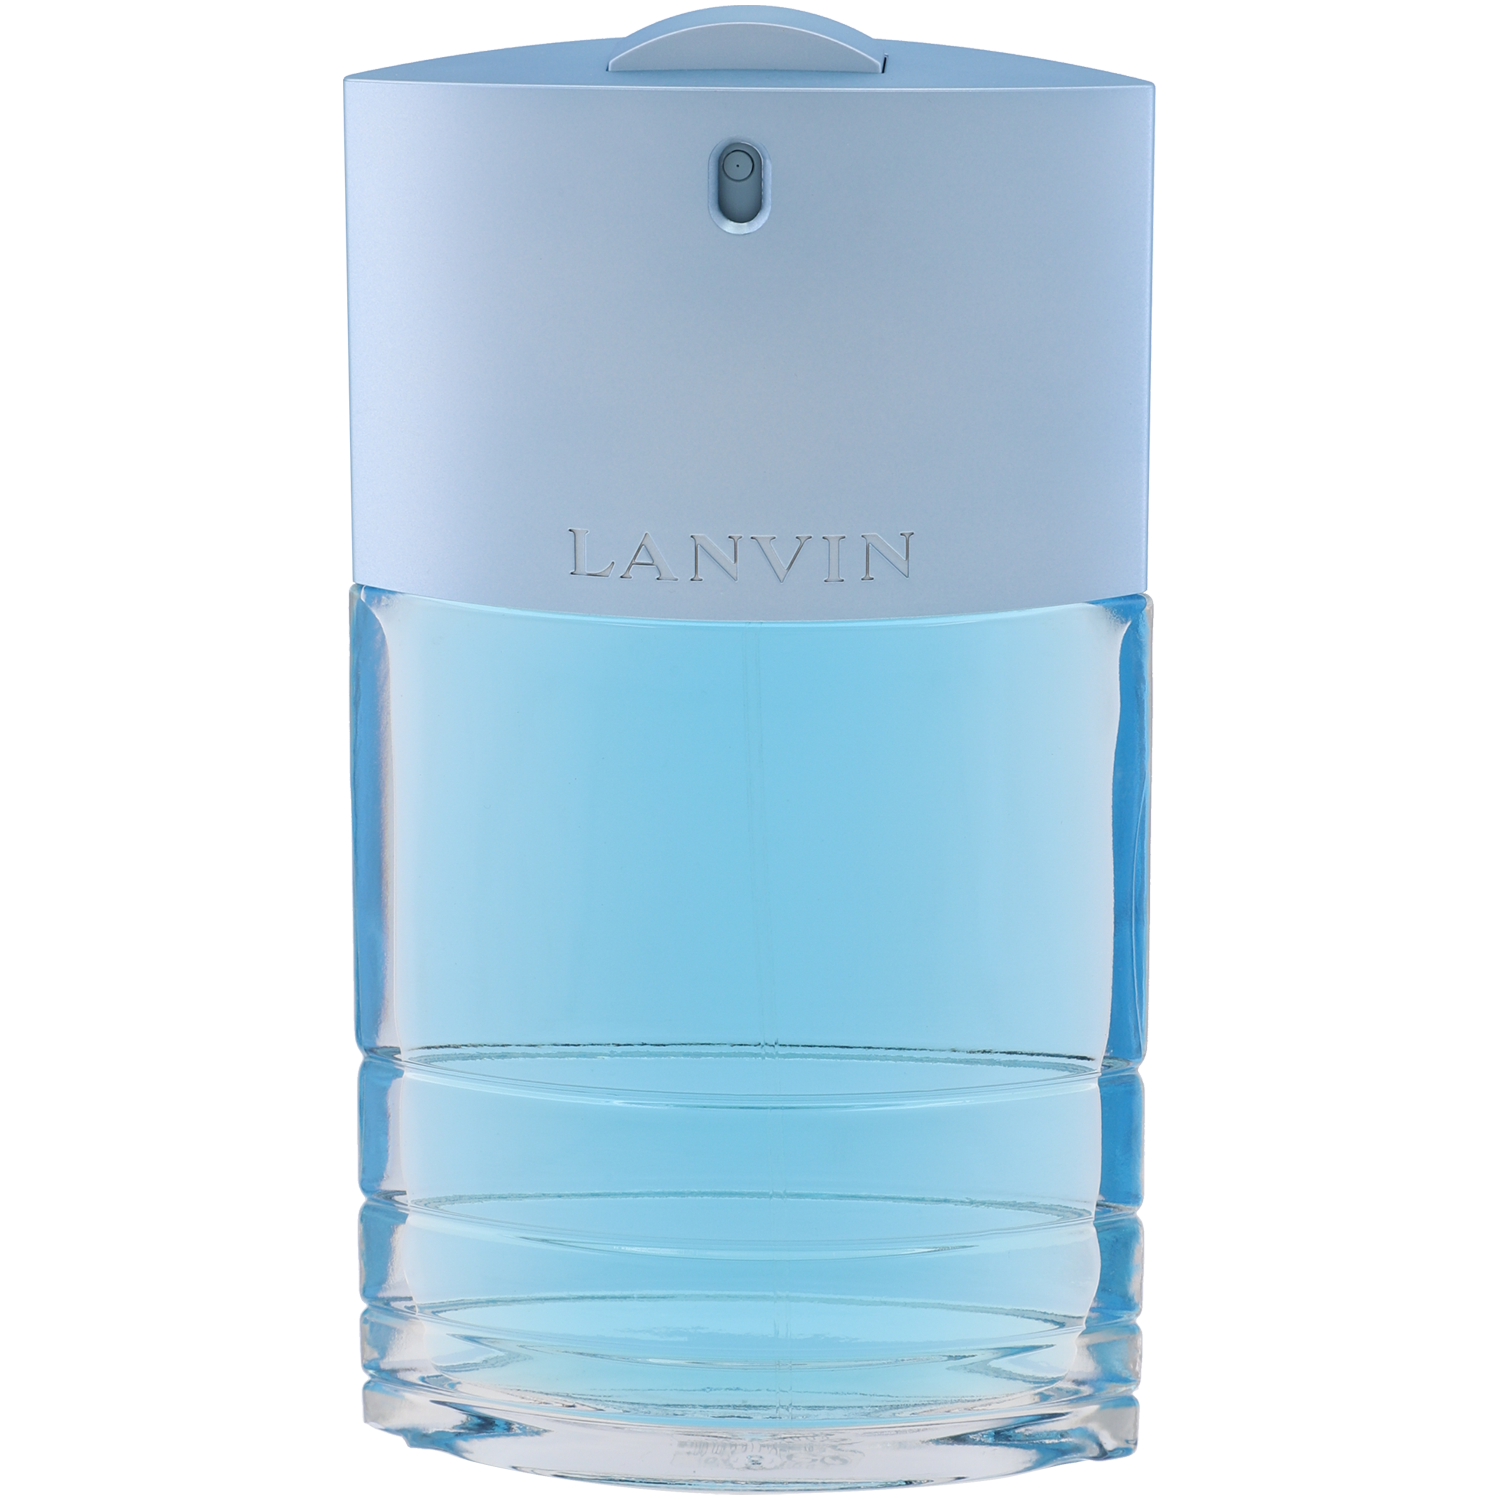 Lanvin Oxygene Homme туалетная вода для мужчин, 100 мл oxygene homme туалетная вода 1 5мл